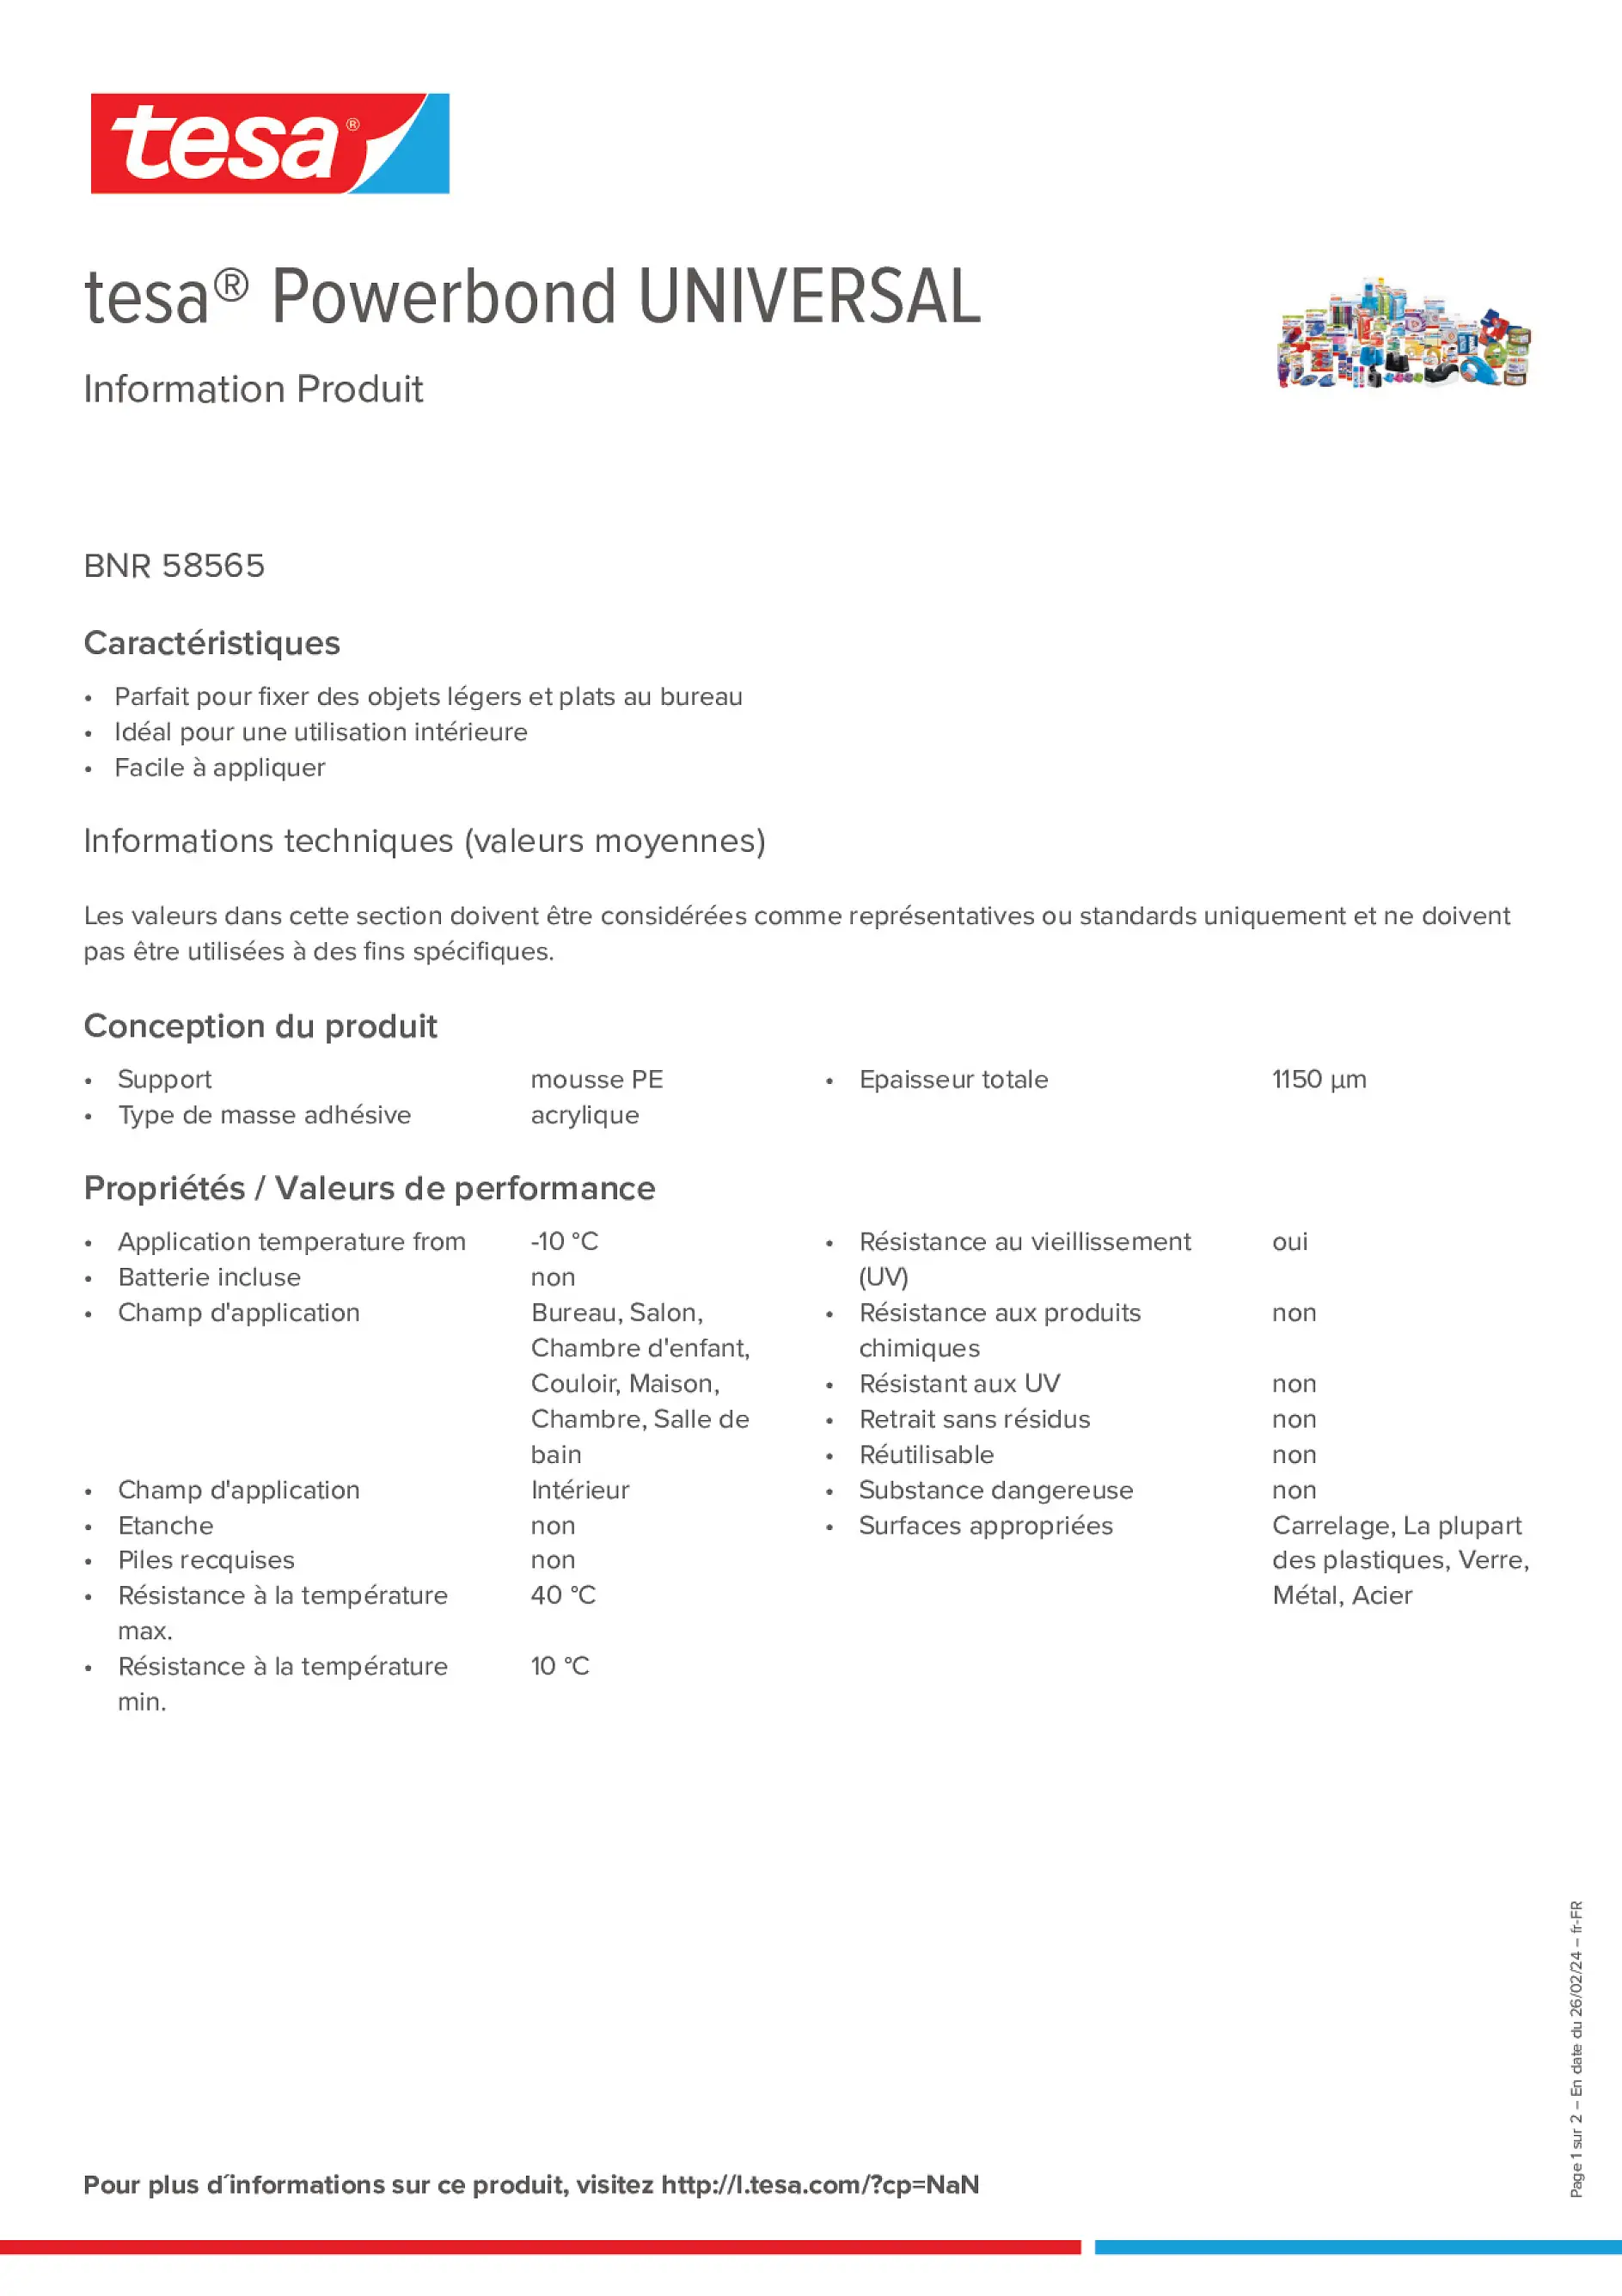 Product information_tesa® Powerbond 58565_fr-FR